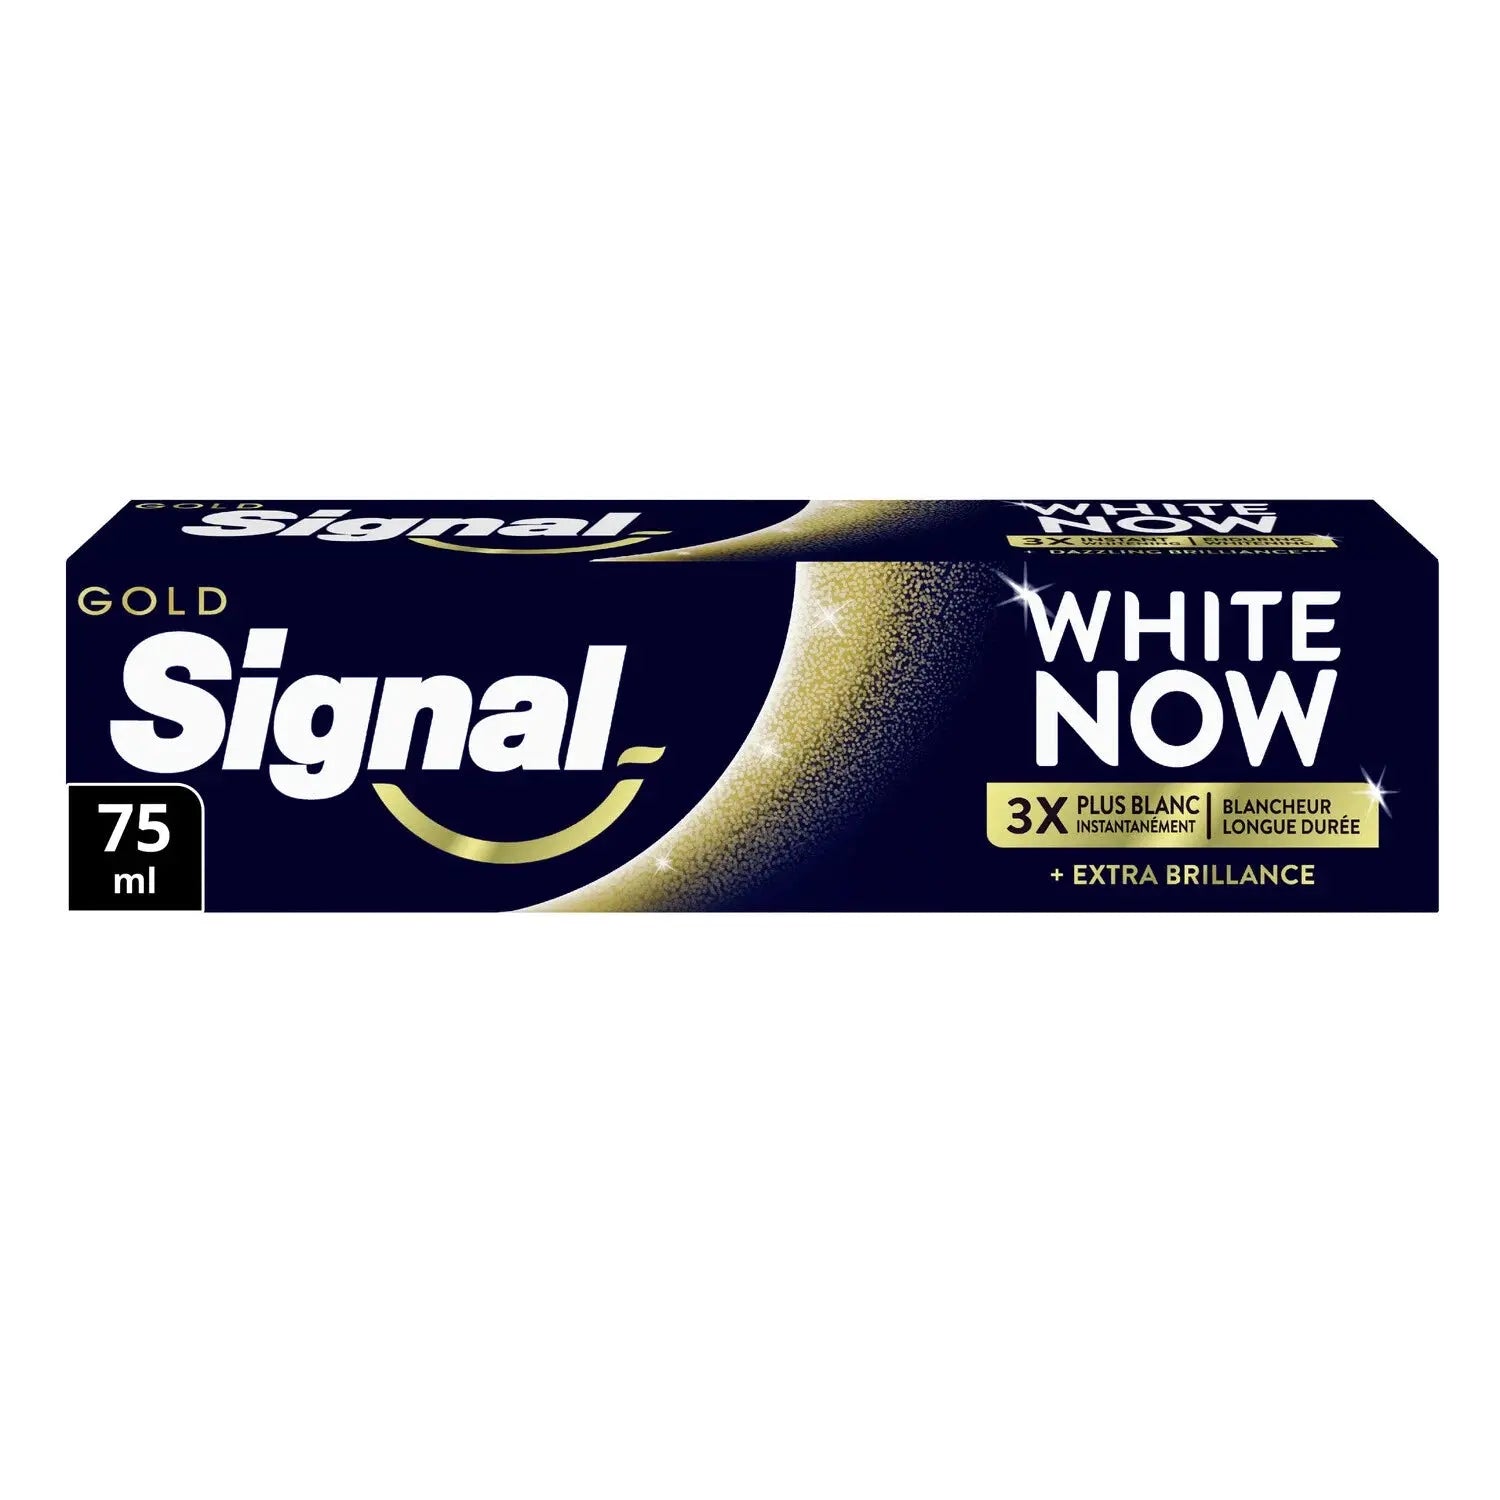 Dentifrice Dentifrice Extra Brillance White Now Gold SIGNAL 8720181327155 Signal